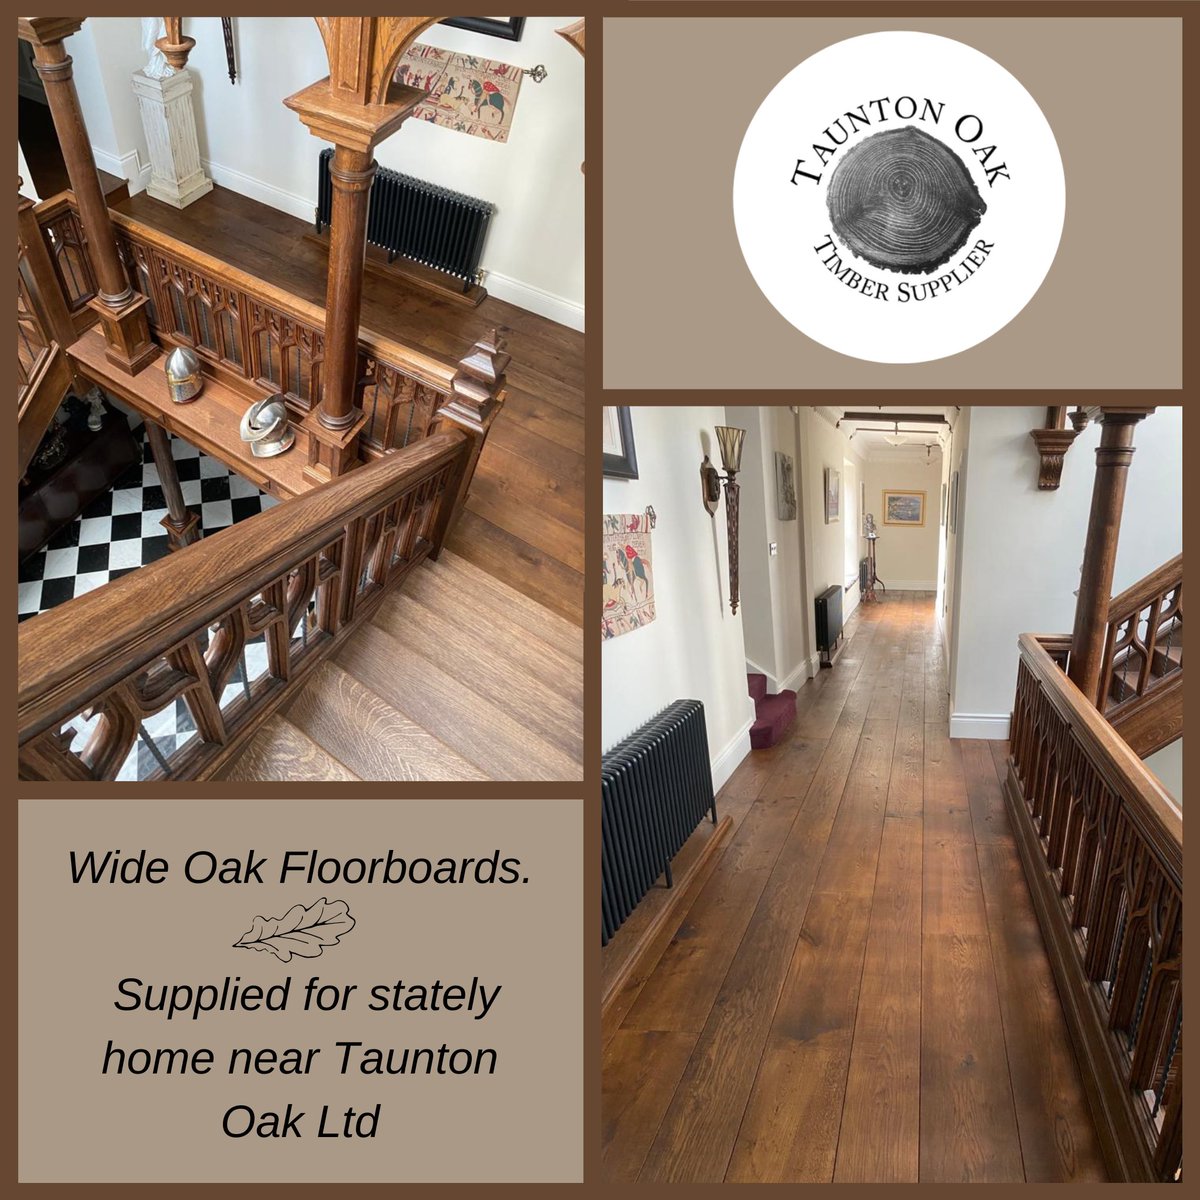 Beautiful wide oak floorboards, and what a beautiful home, just wow 😍
#TauntonOak #OakFlooring #WestSomerset #LocalBusiness #StayLocal #OakWood #Beautiful